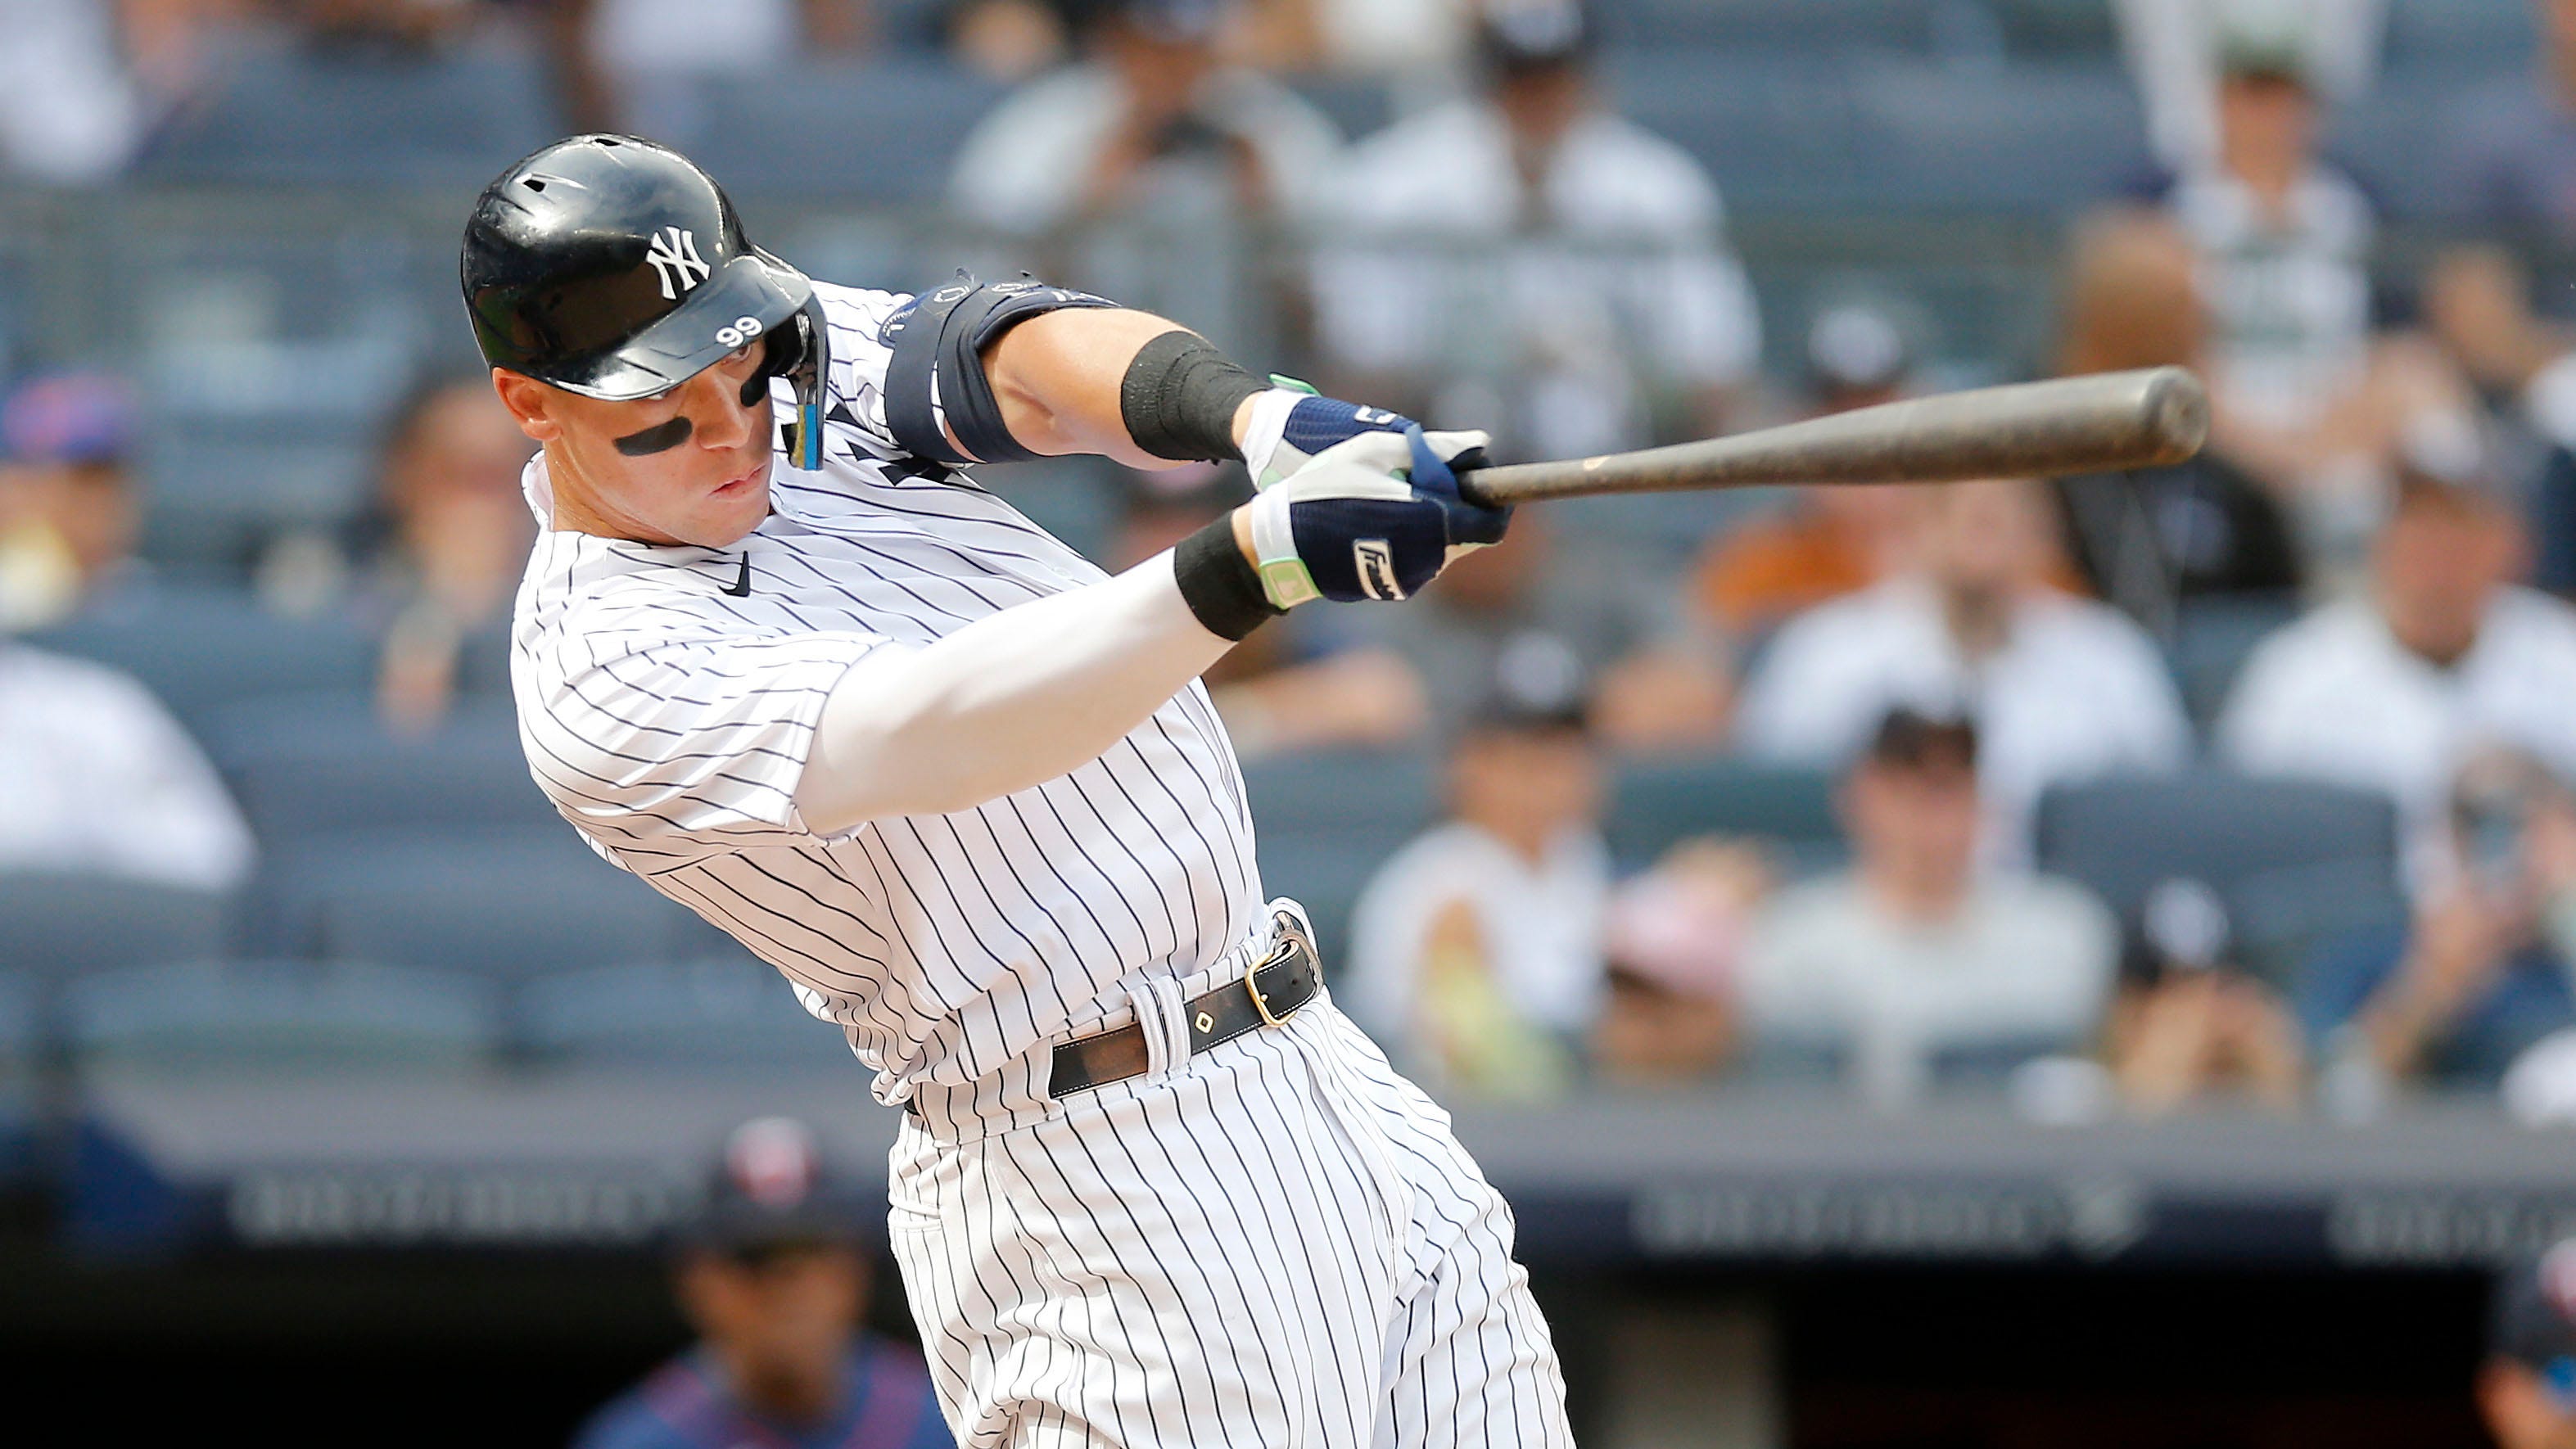 Yankees' Aaron Judge cites 'bigger ultimate goal' for skipping